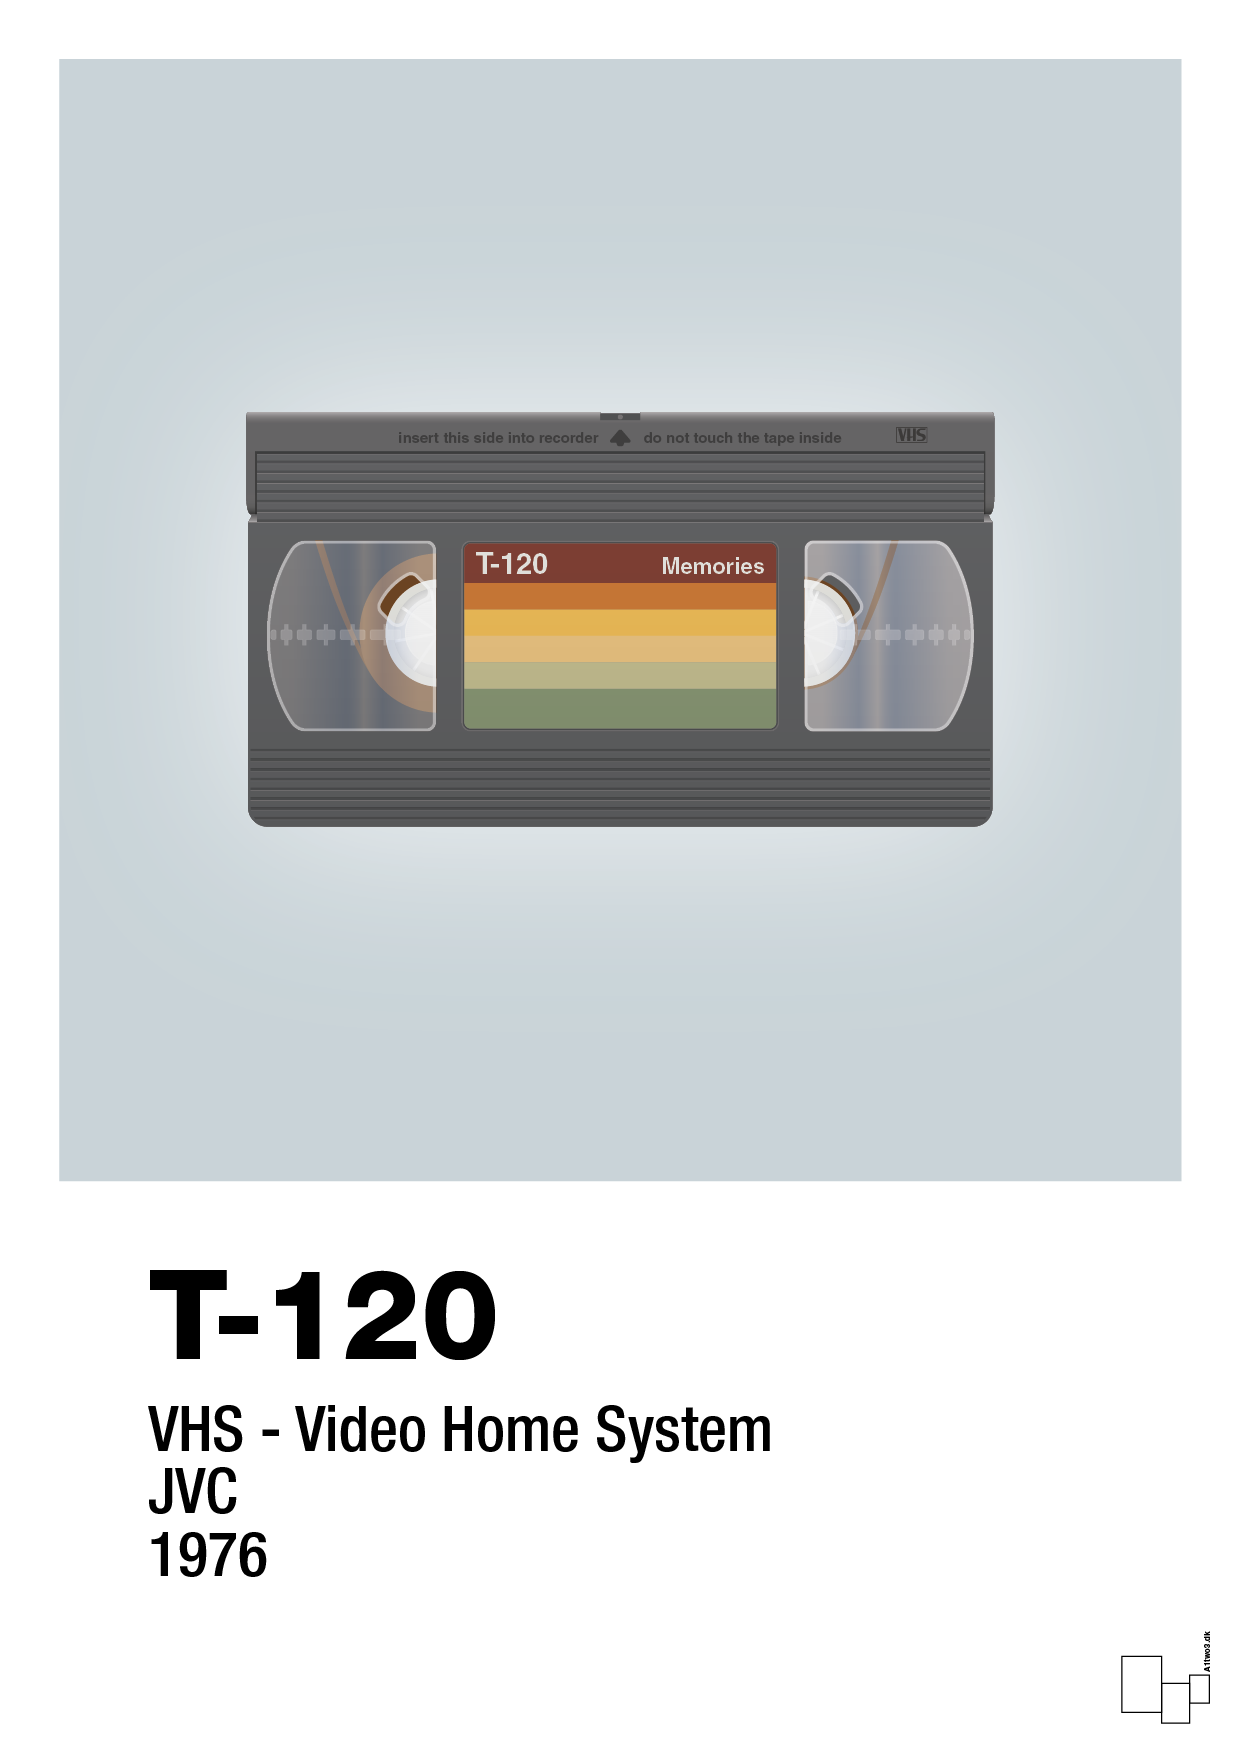 videobånd t-120 - Plakat med Grafik i Light Drizzle